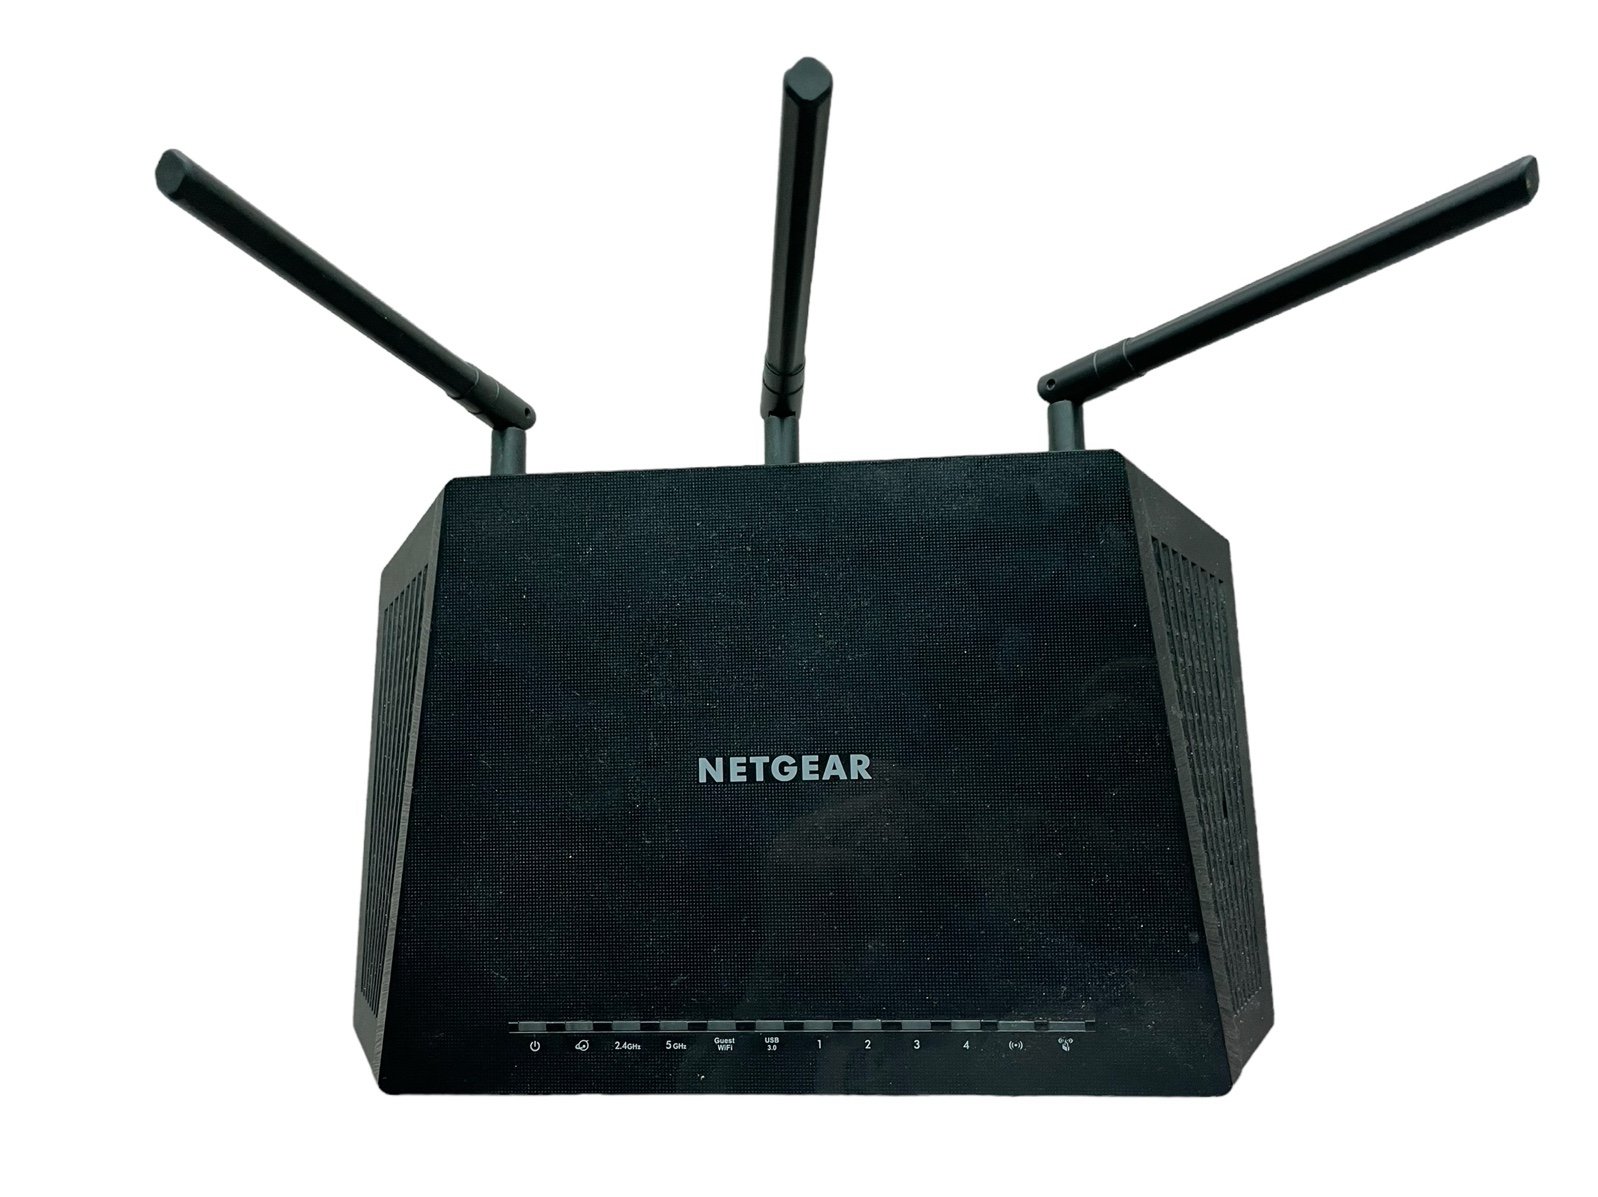 NETGEAR Nighthawk Smart Wi-Fi Router, AC1750 keRFhxWo7